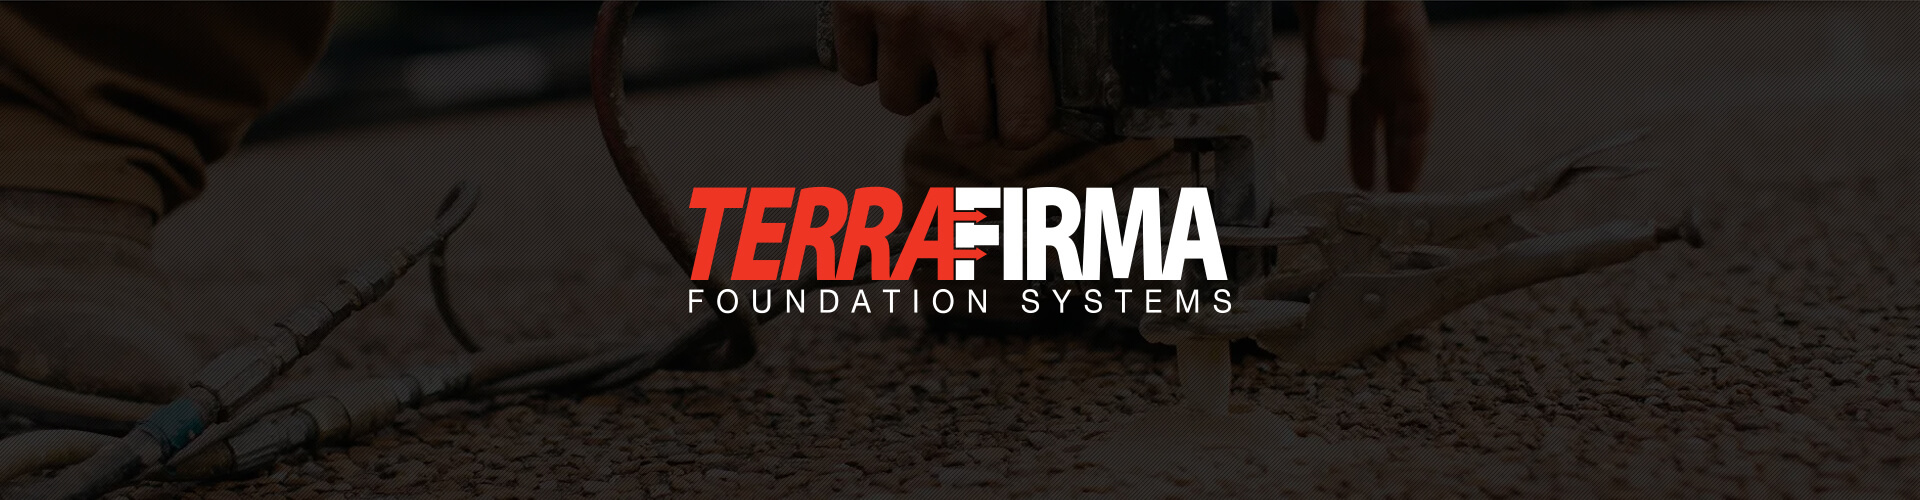 TerraFirma Foundation Systems banner